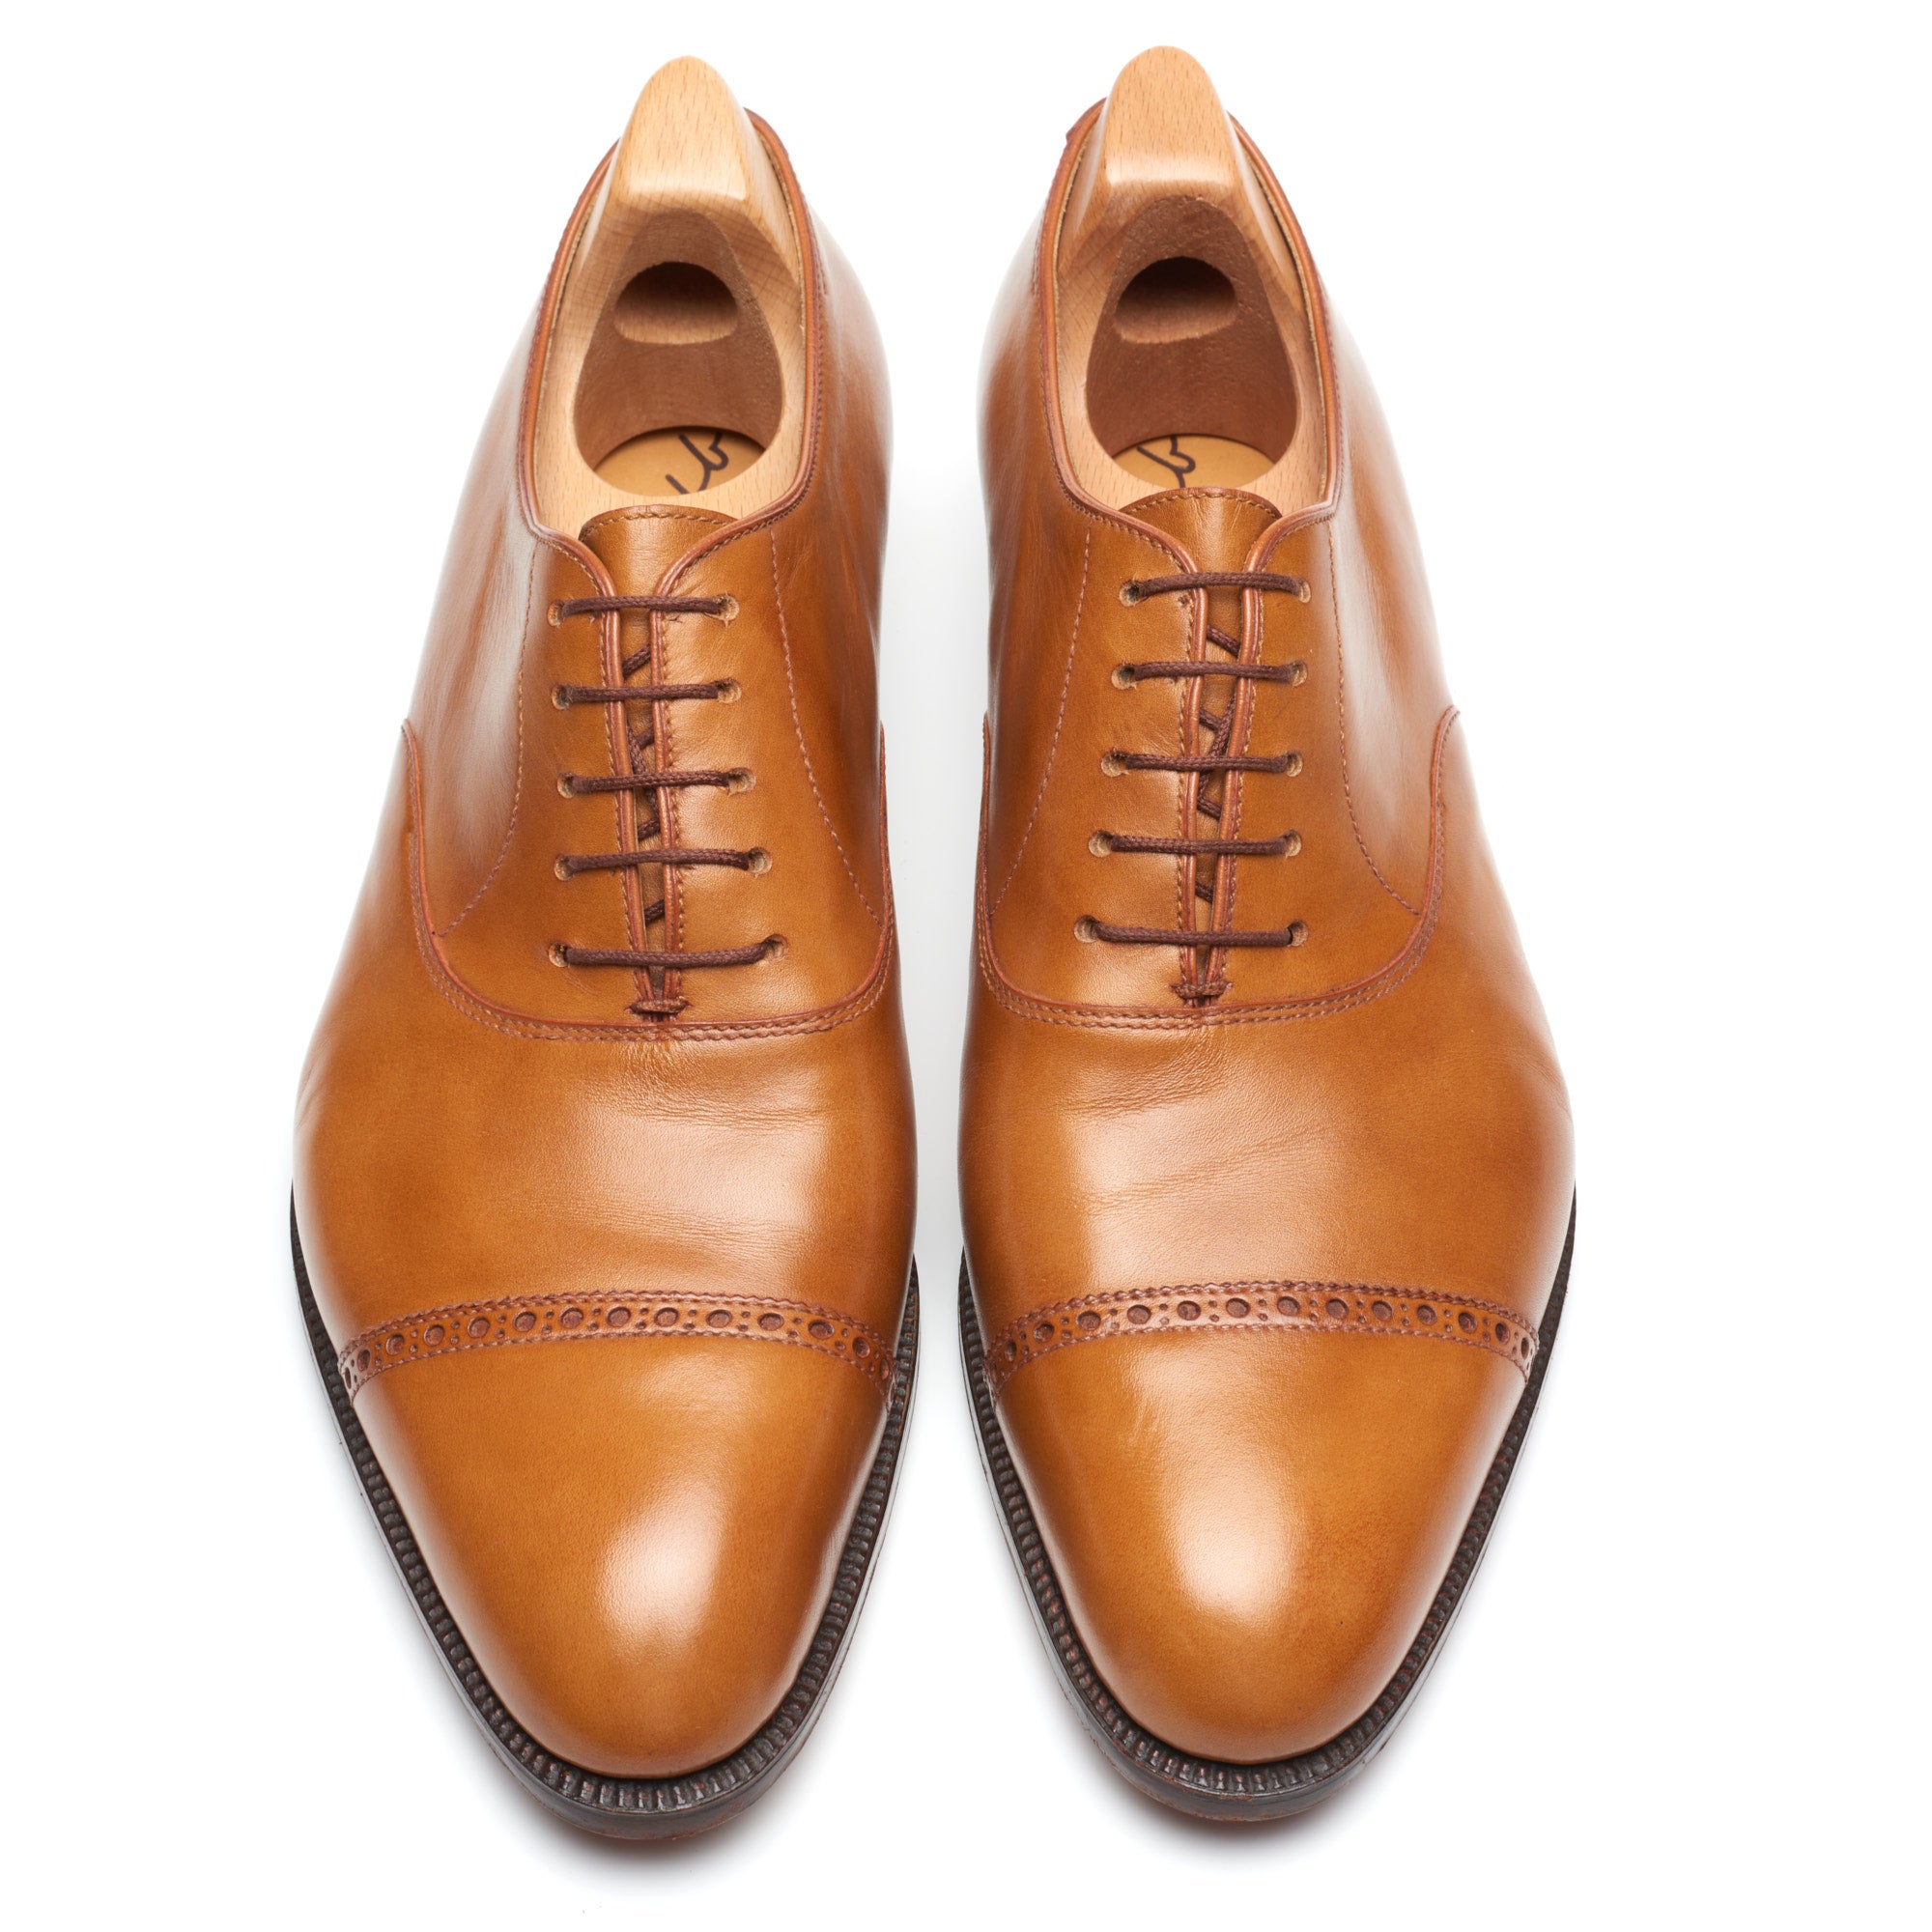 JOHN LOBB Paris City II Bespoke Tan Museum Calf Leather Oxford Shoes UK 7.5 US 8.5